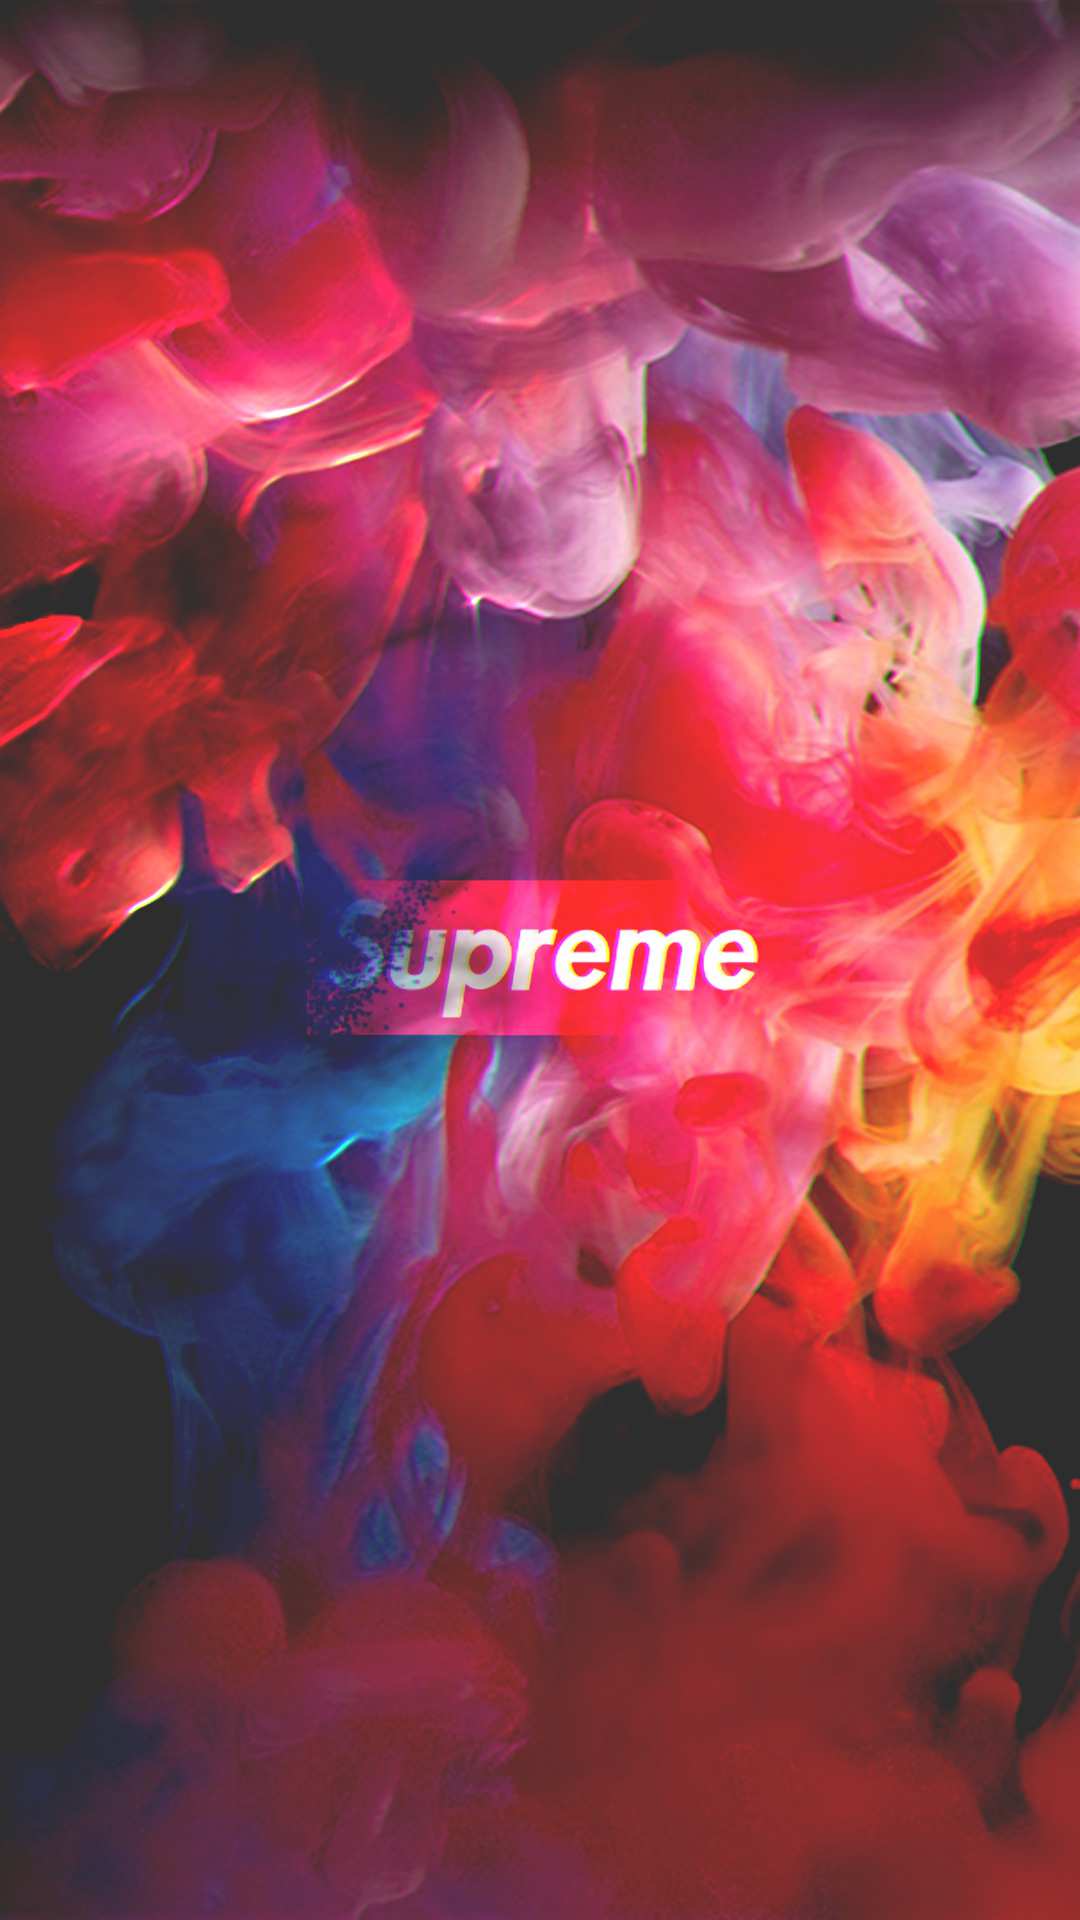 Supreme iPhone Wallpaper